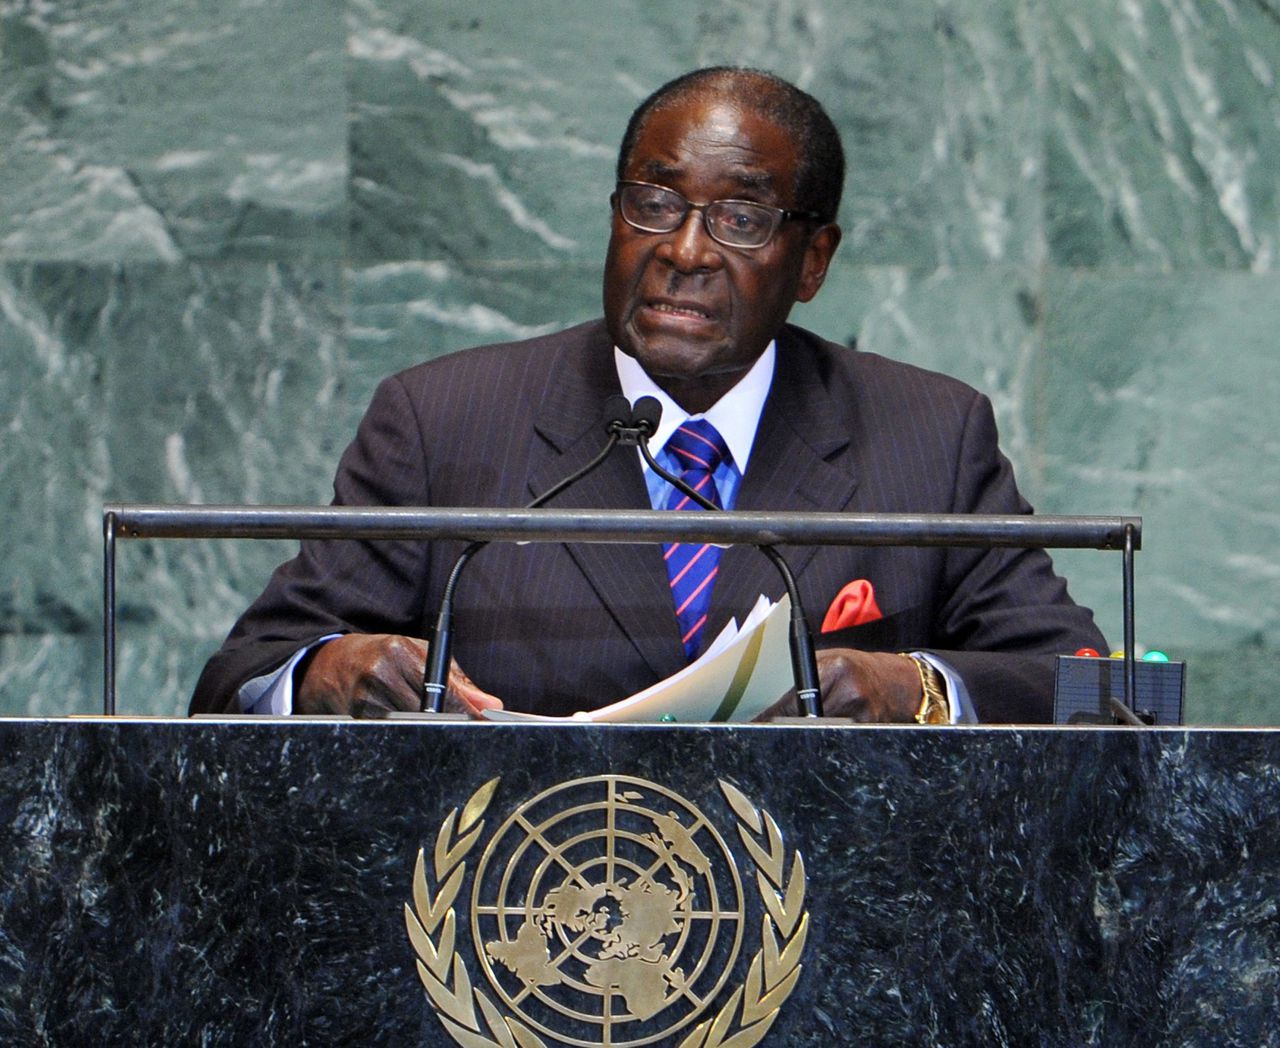 epa03411789 Robert Mugabe, President of the Republic of Zimbabwe addresses the 67th session of the United Nations General Assembly at United Nations headquarters in New York, New York, USA, 26 September 2012. EPA/JASON SZENES